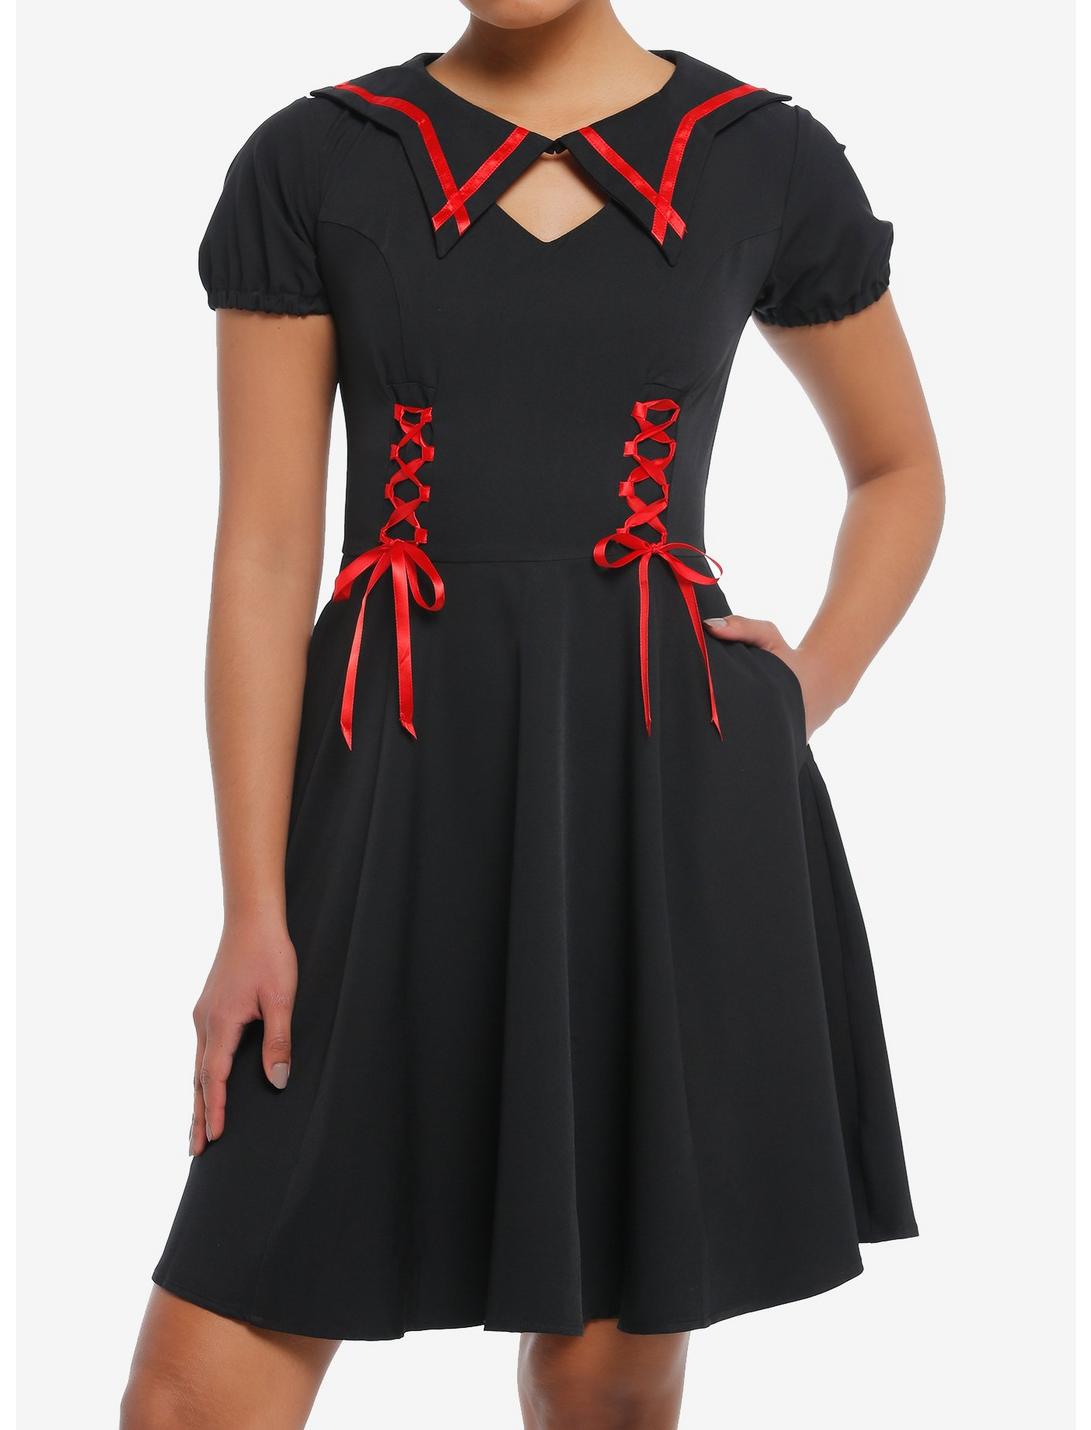 Black & Red Lace-Up Ribbon Skater Dress, RED, hi-res